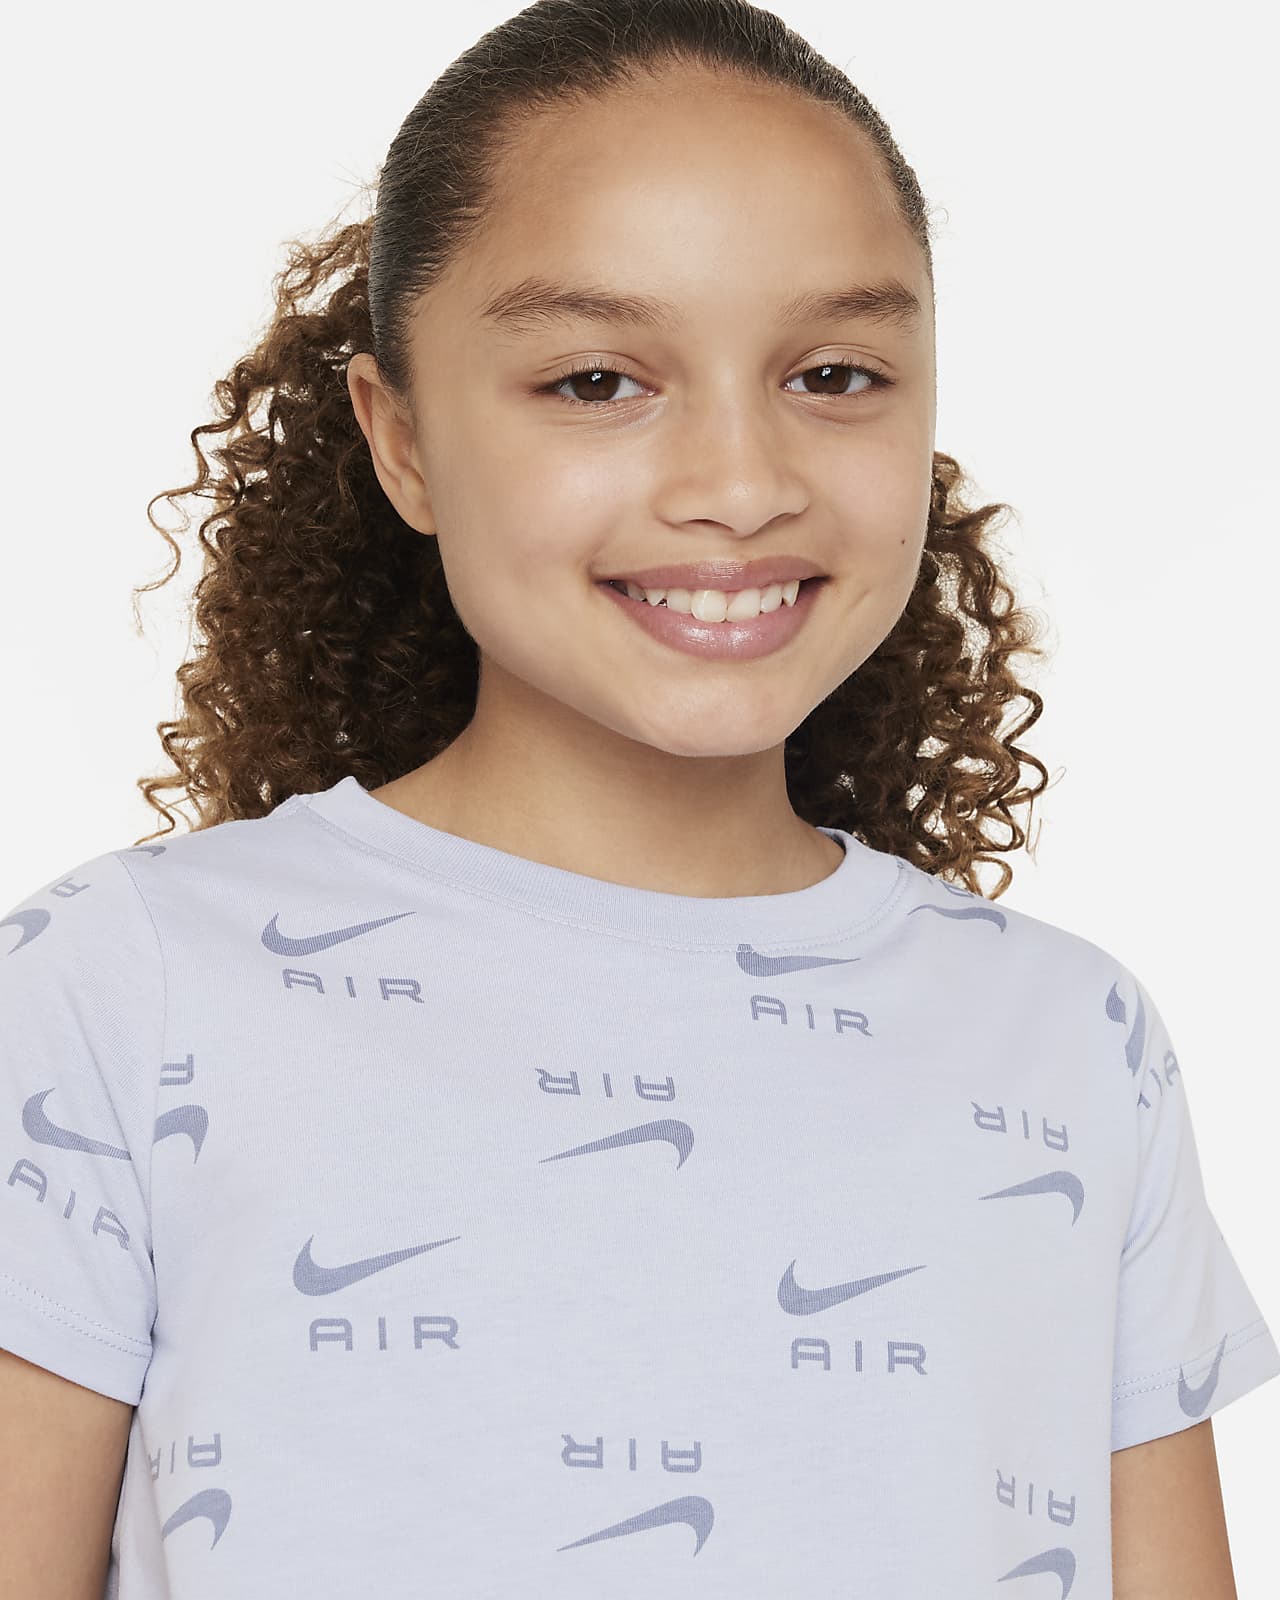 Nike Sportswear Big Kids' (Girls') Cropped T-Shirt